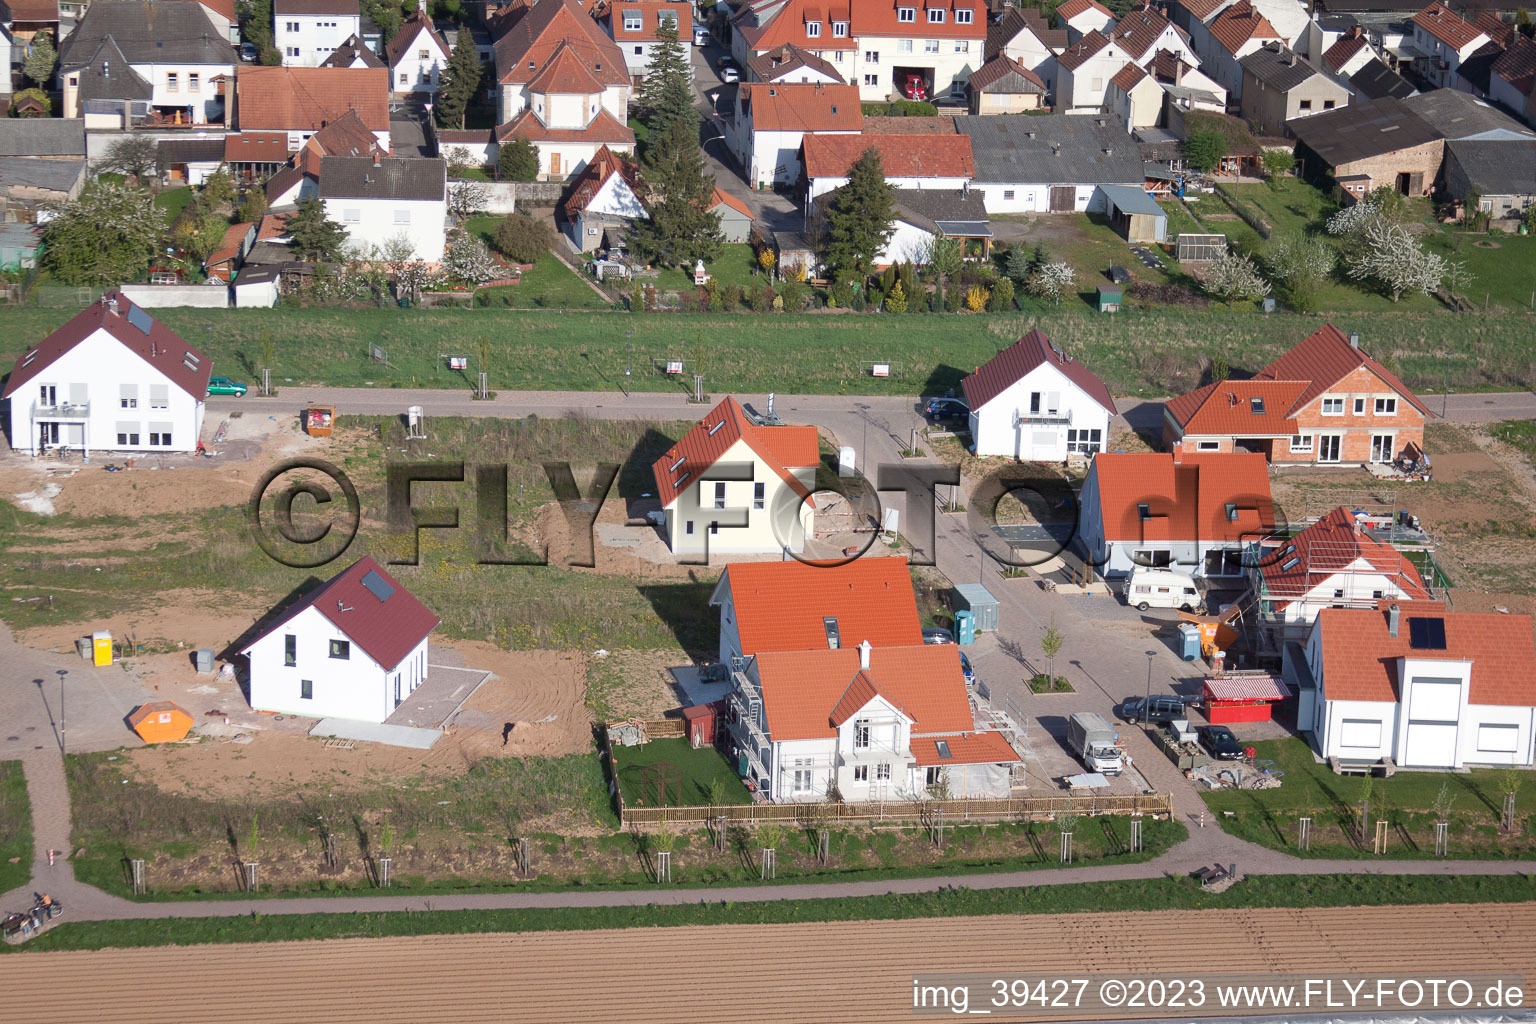 Quartier Mörlheim in Landau in der Pfalz dans le département Rhénanie-Palatinat, Allemagne vue du ciel